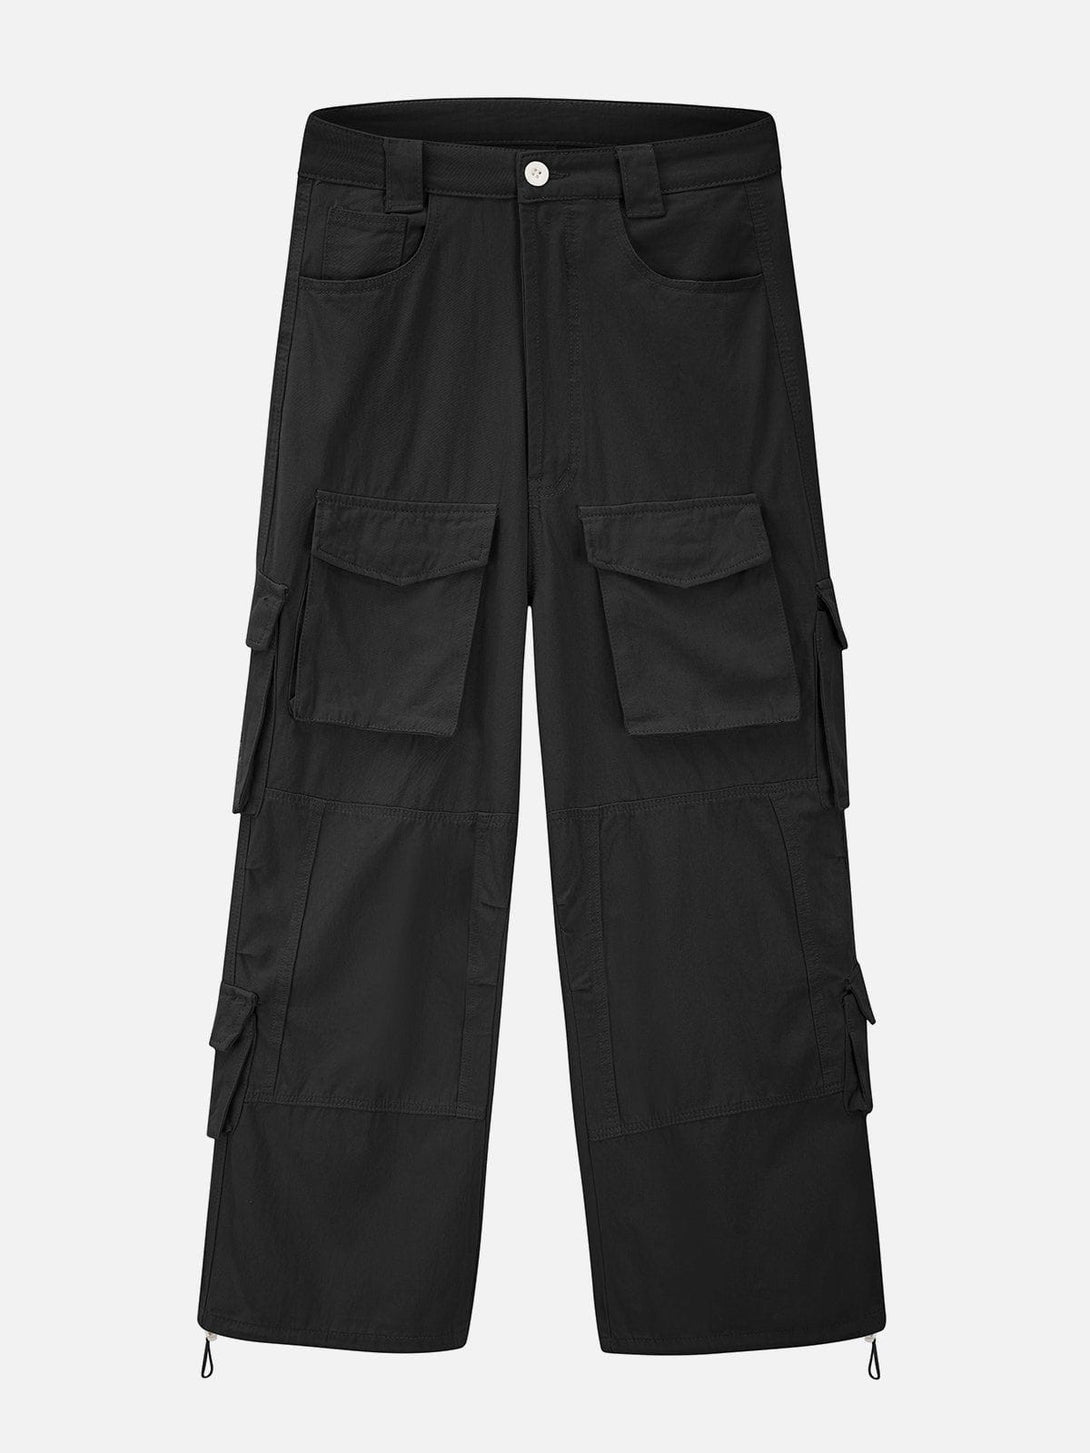 Majesda® - Vintage Multi-Pocket Solid Cargo Pants outfit ideas streetwear fashion